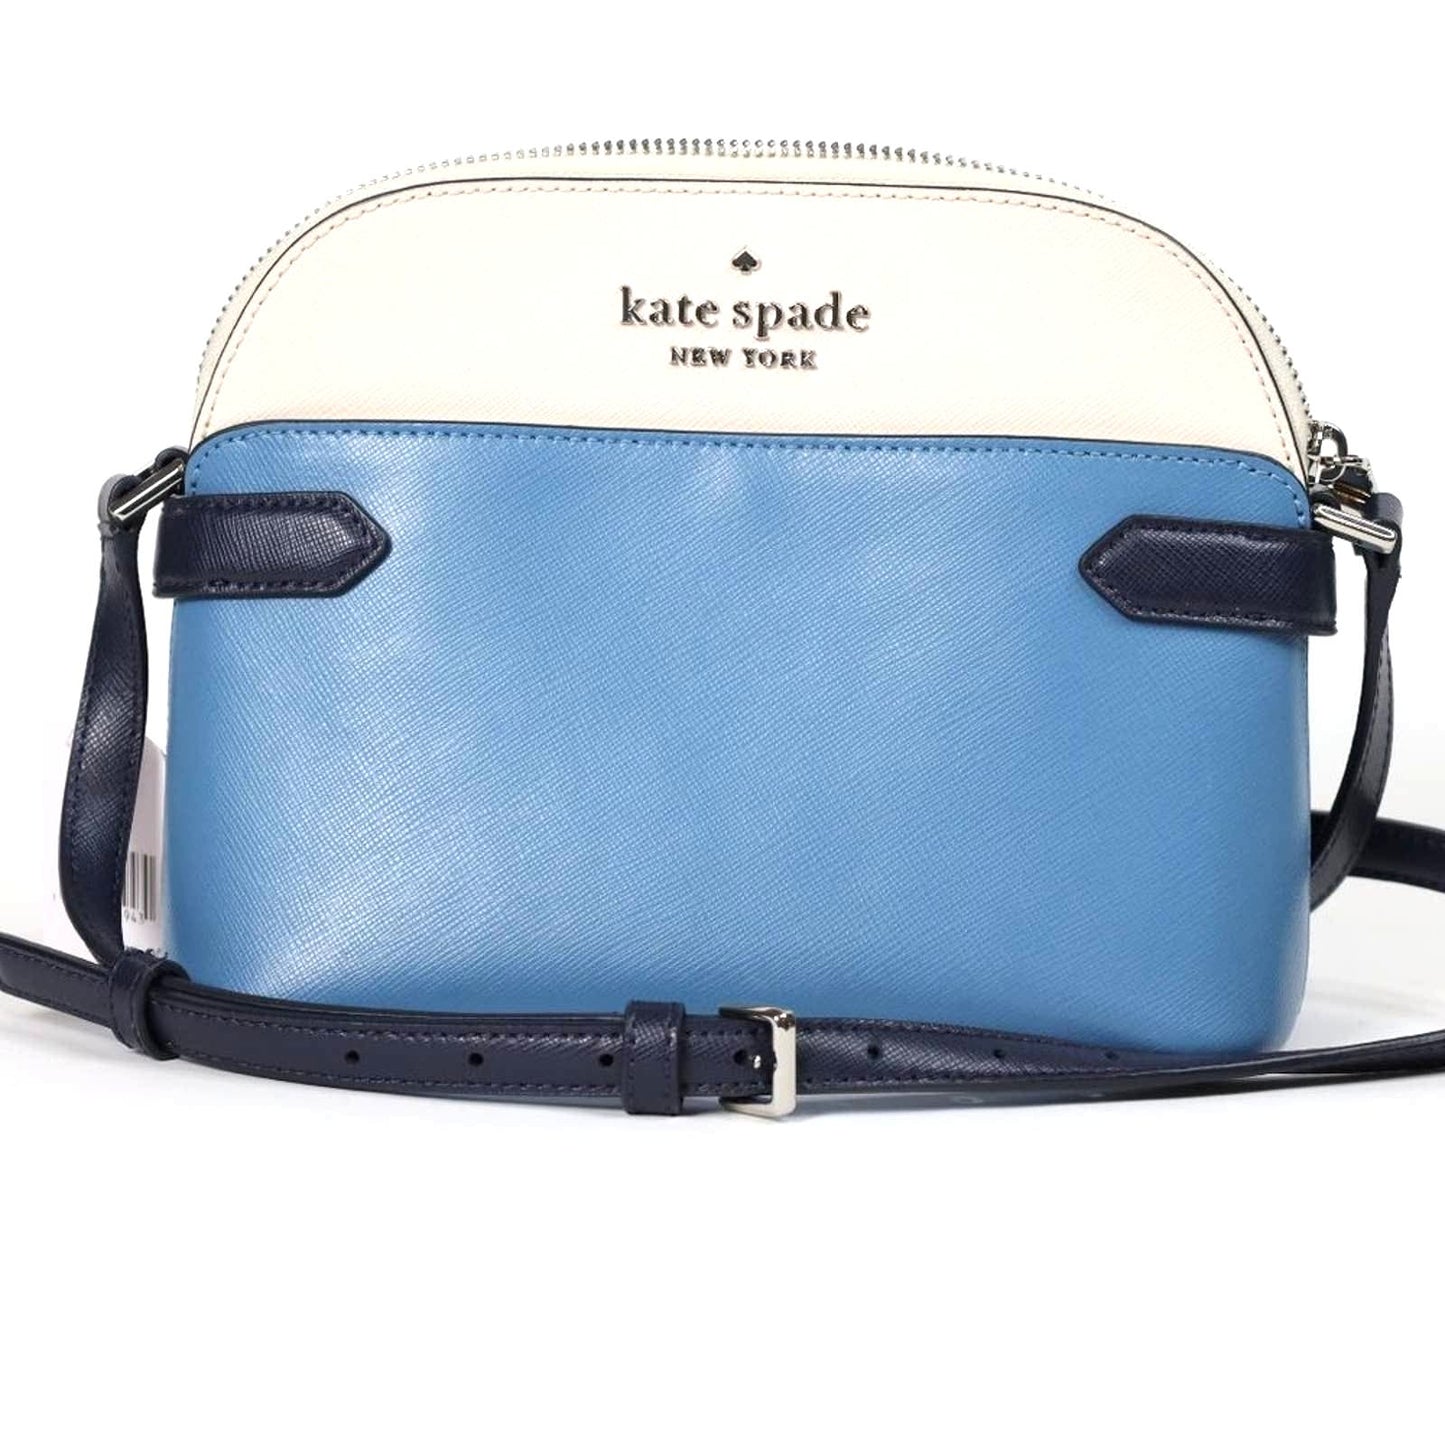 Kate Spade Staci Colorblock Dome Crossbody Bag - Niagara Blue/Multi